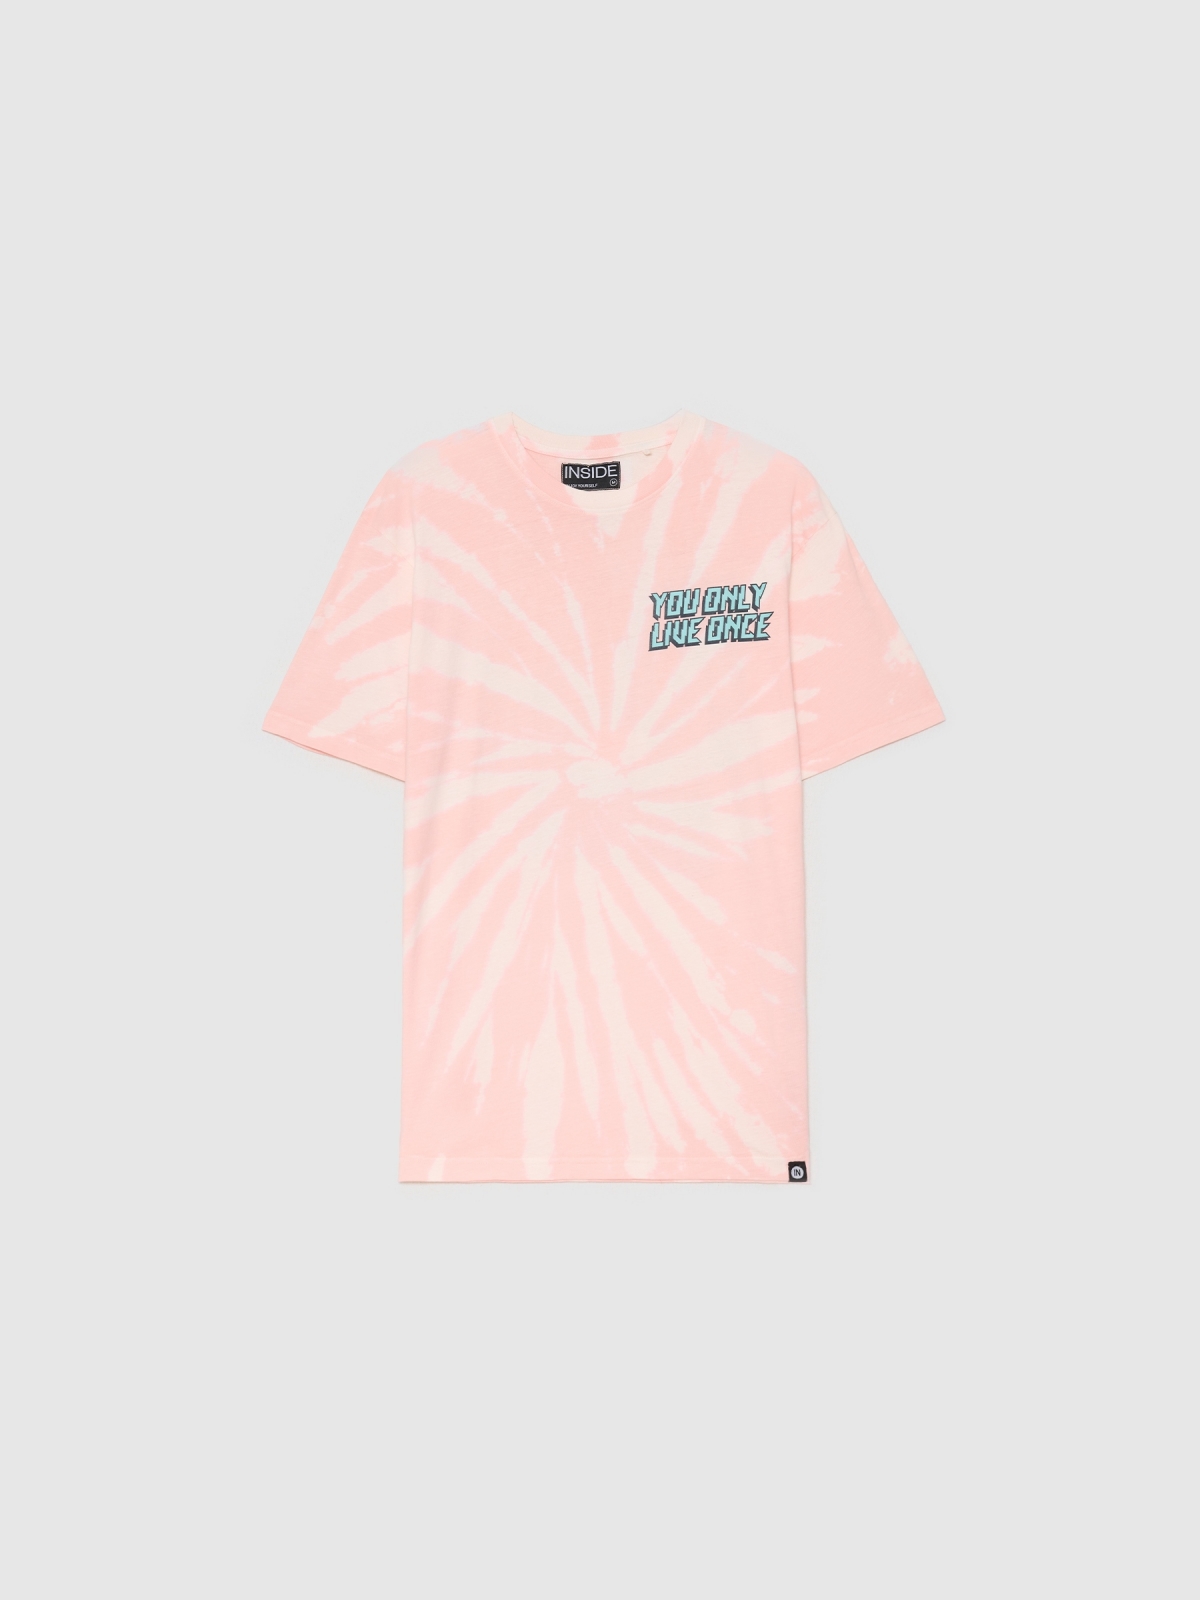  T-shirt de caveira tie dye rosa pêssego